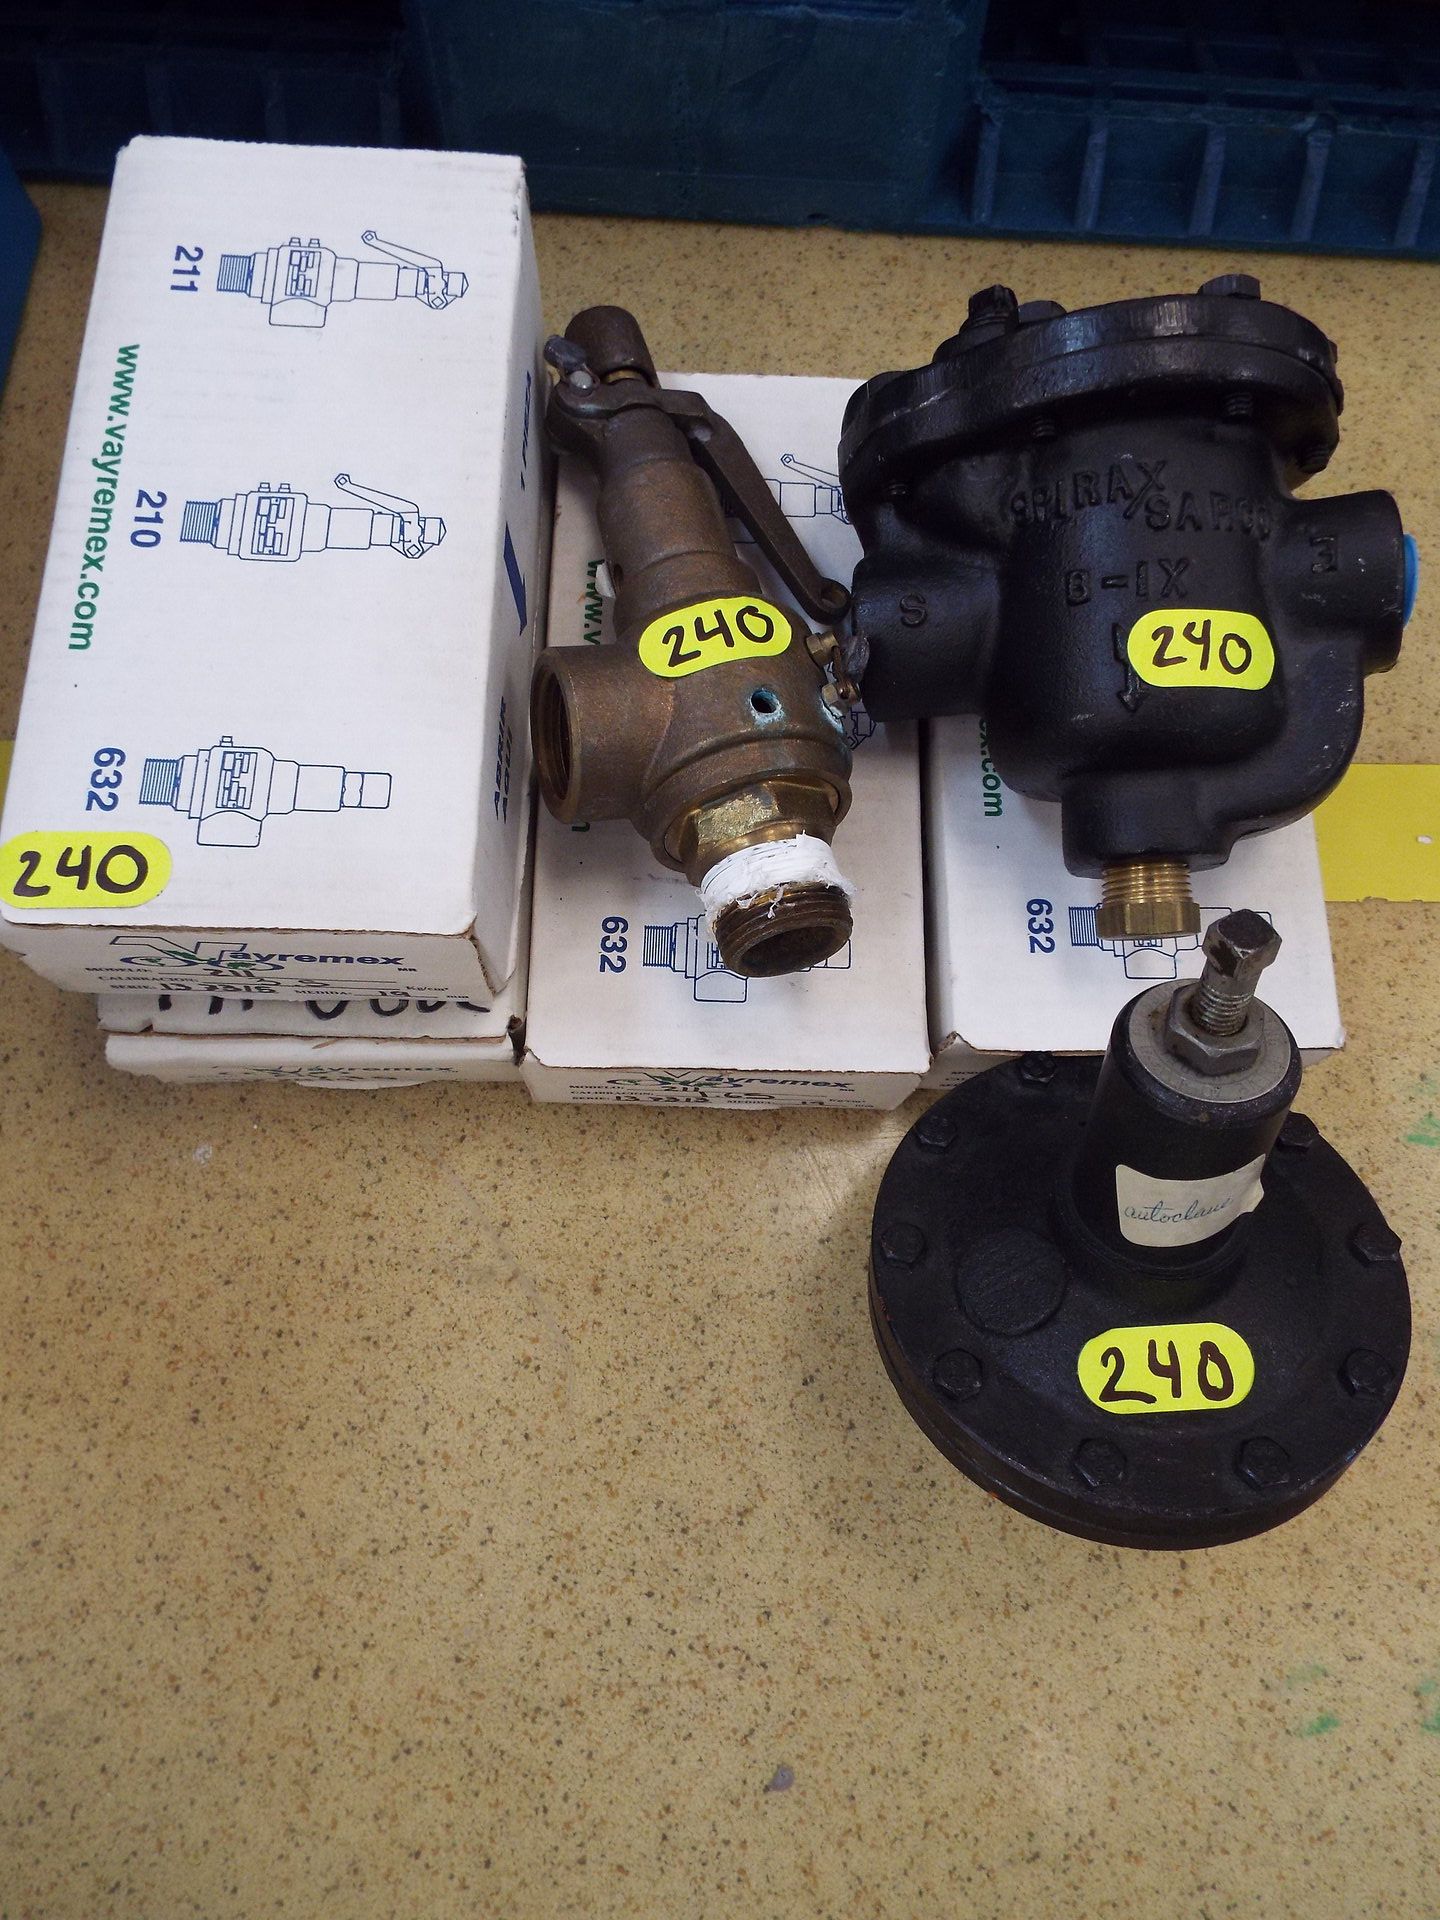 (5) Vayremex model 211 steam safety valves, (1) PIRAXSACO B-1X steam trap and (1) steam regulator